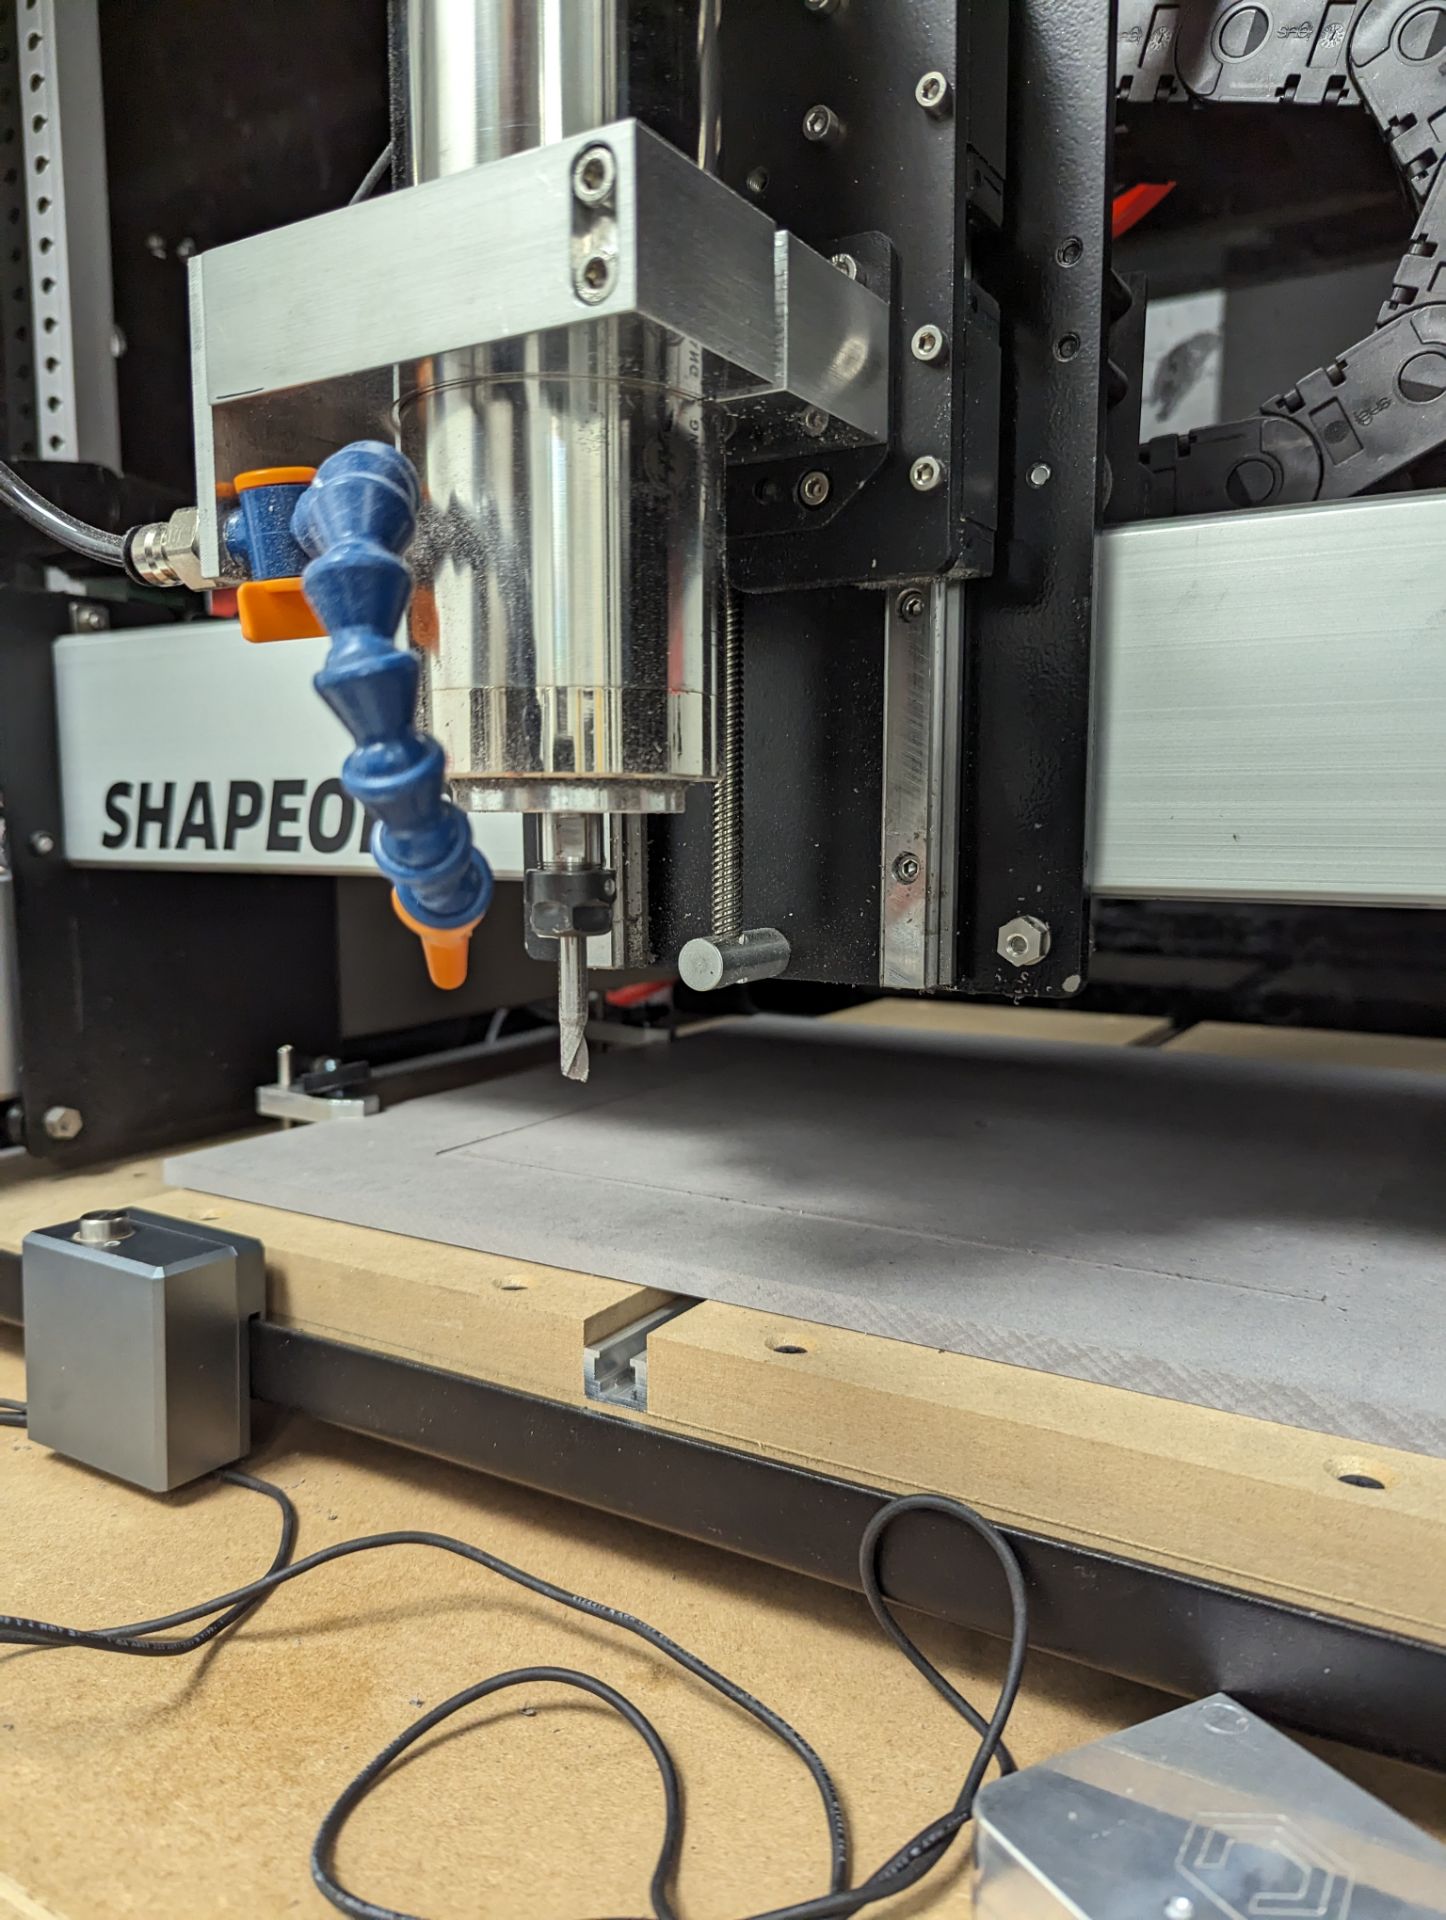 Shapeoko Bench Top 3D Cutting Machine, Serial No. 3400 - Image 2 of 4